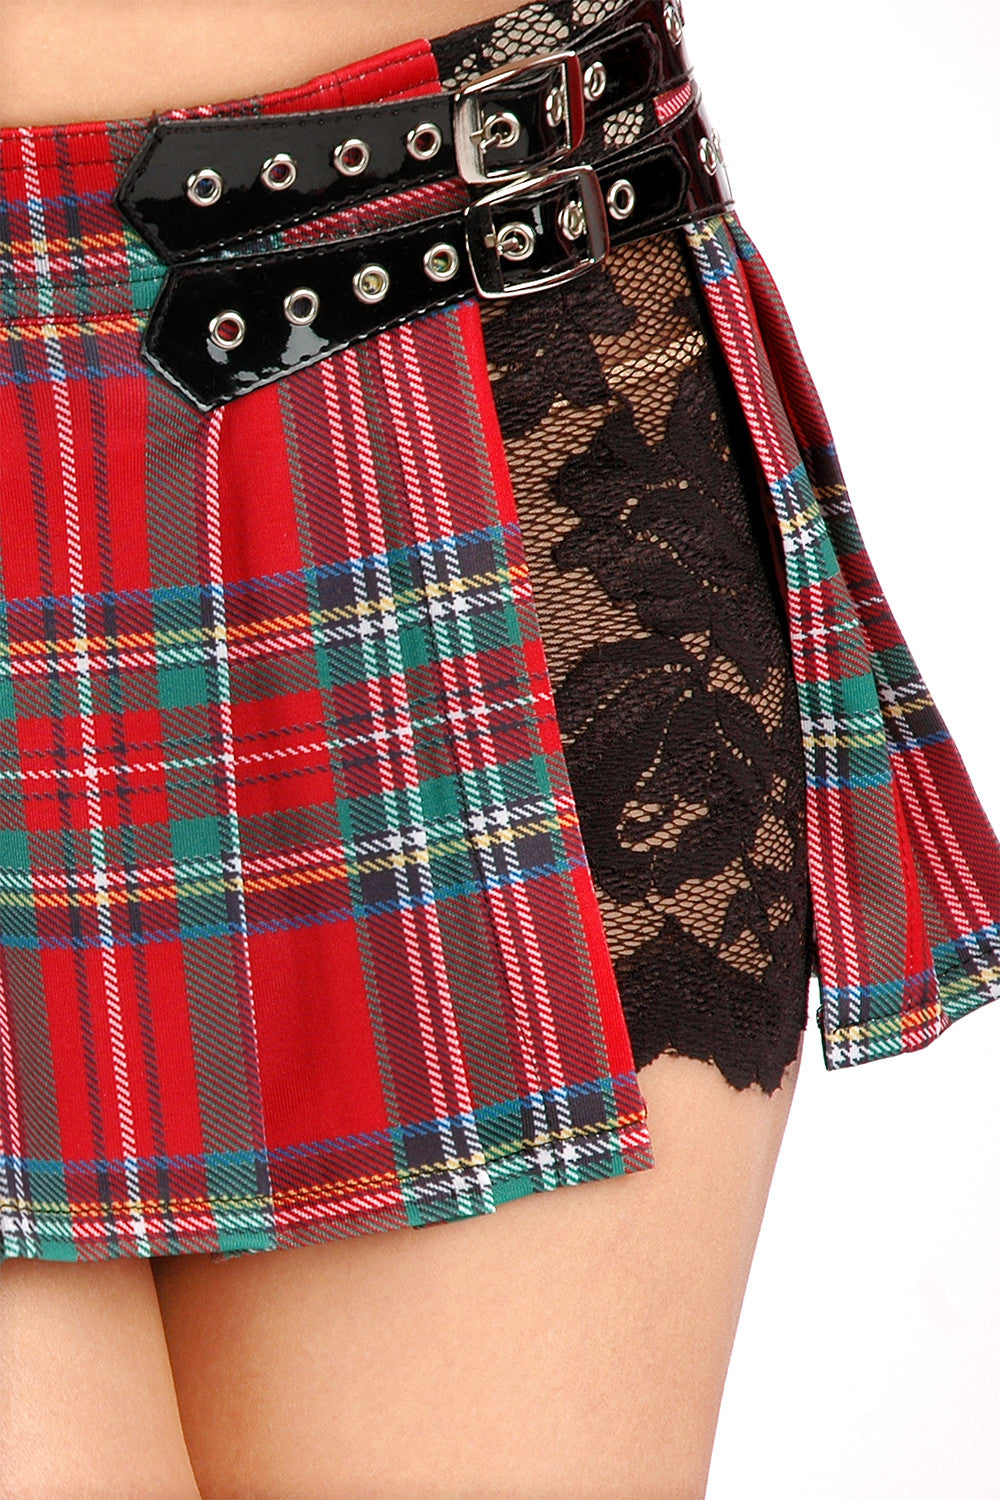 Punk School Girl Skirt